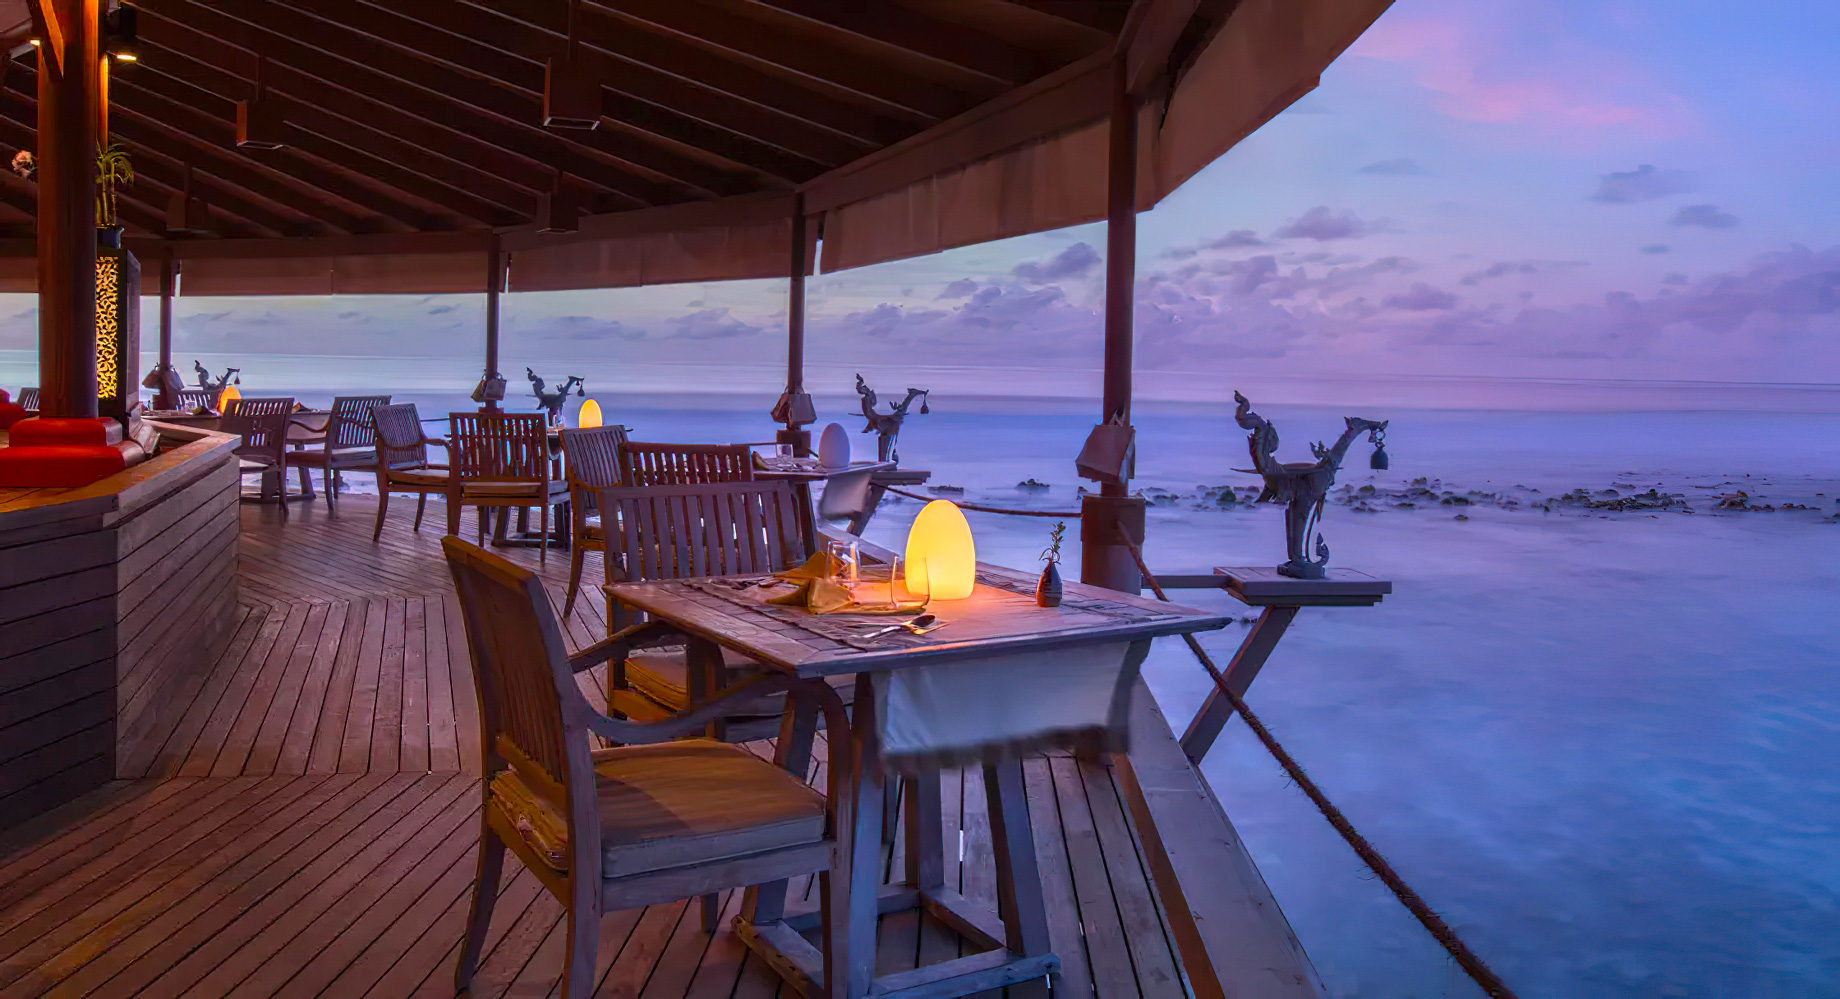 Anantara Thigu Maldives Resort - South Male Atoll, Maldives - Baan Huraa Restaurant Ocean View Sunset